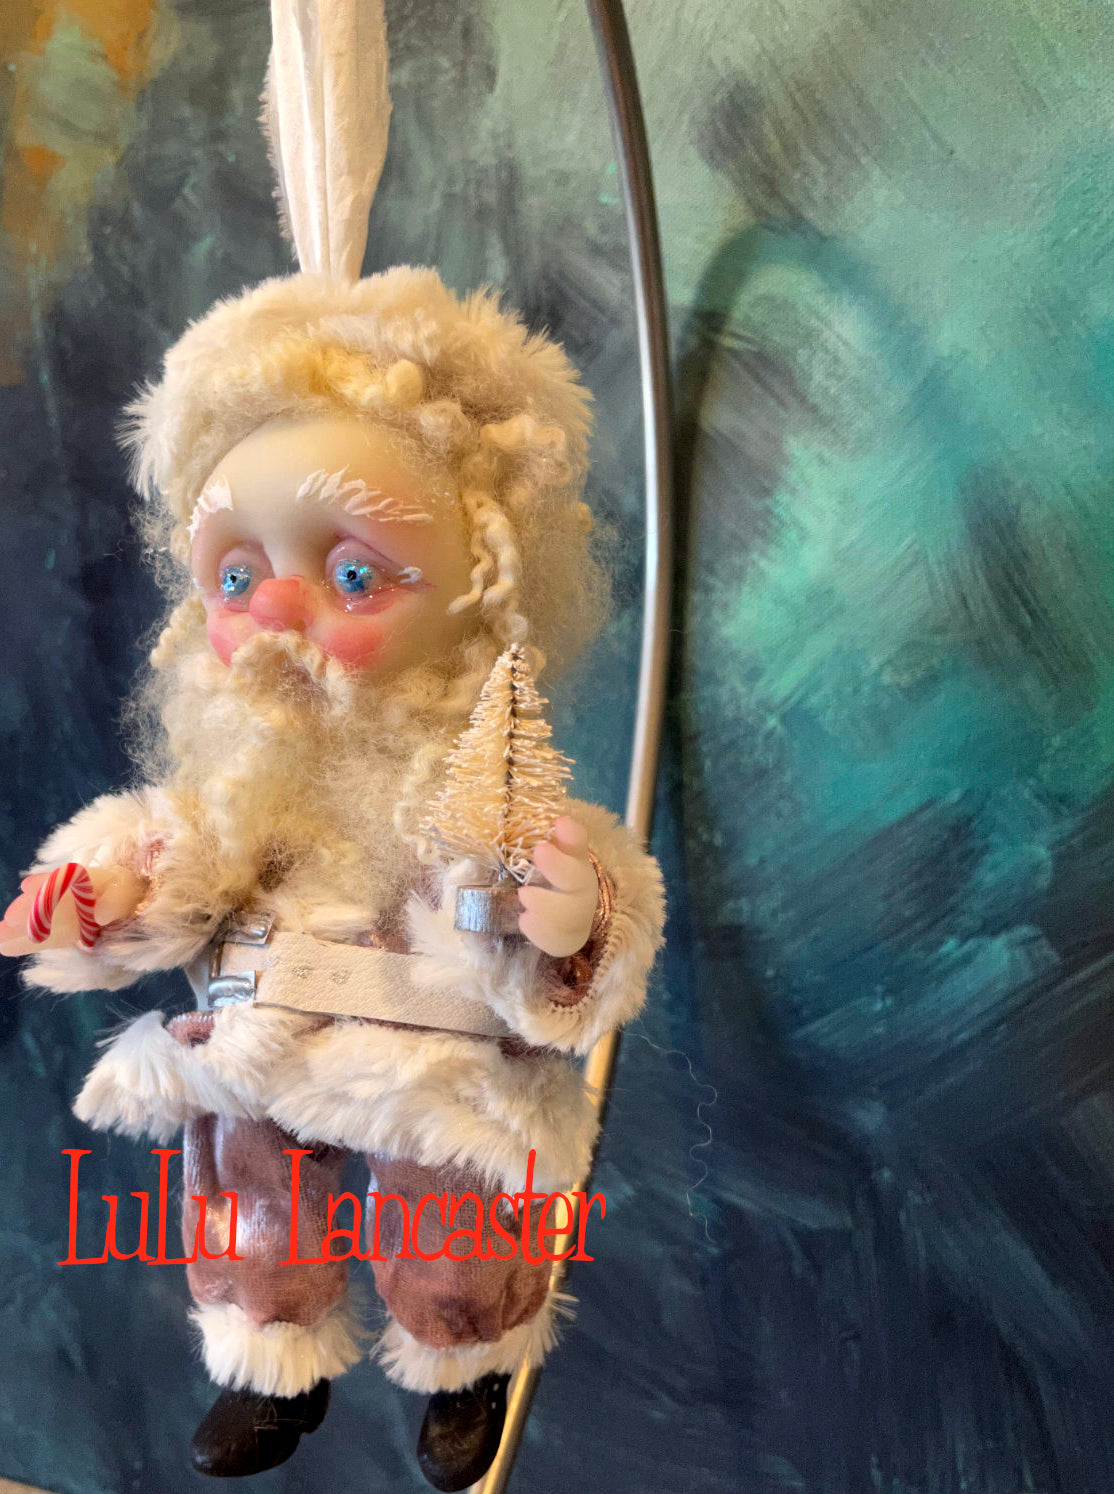 Kris Mini Christmas hanging Santa Original LuLu Lancaster Art Doll